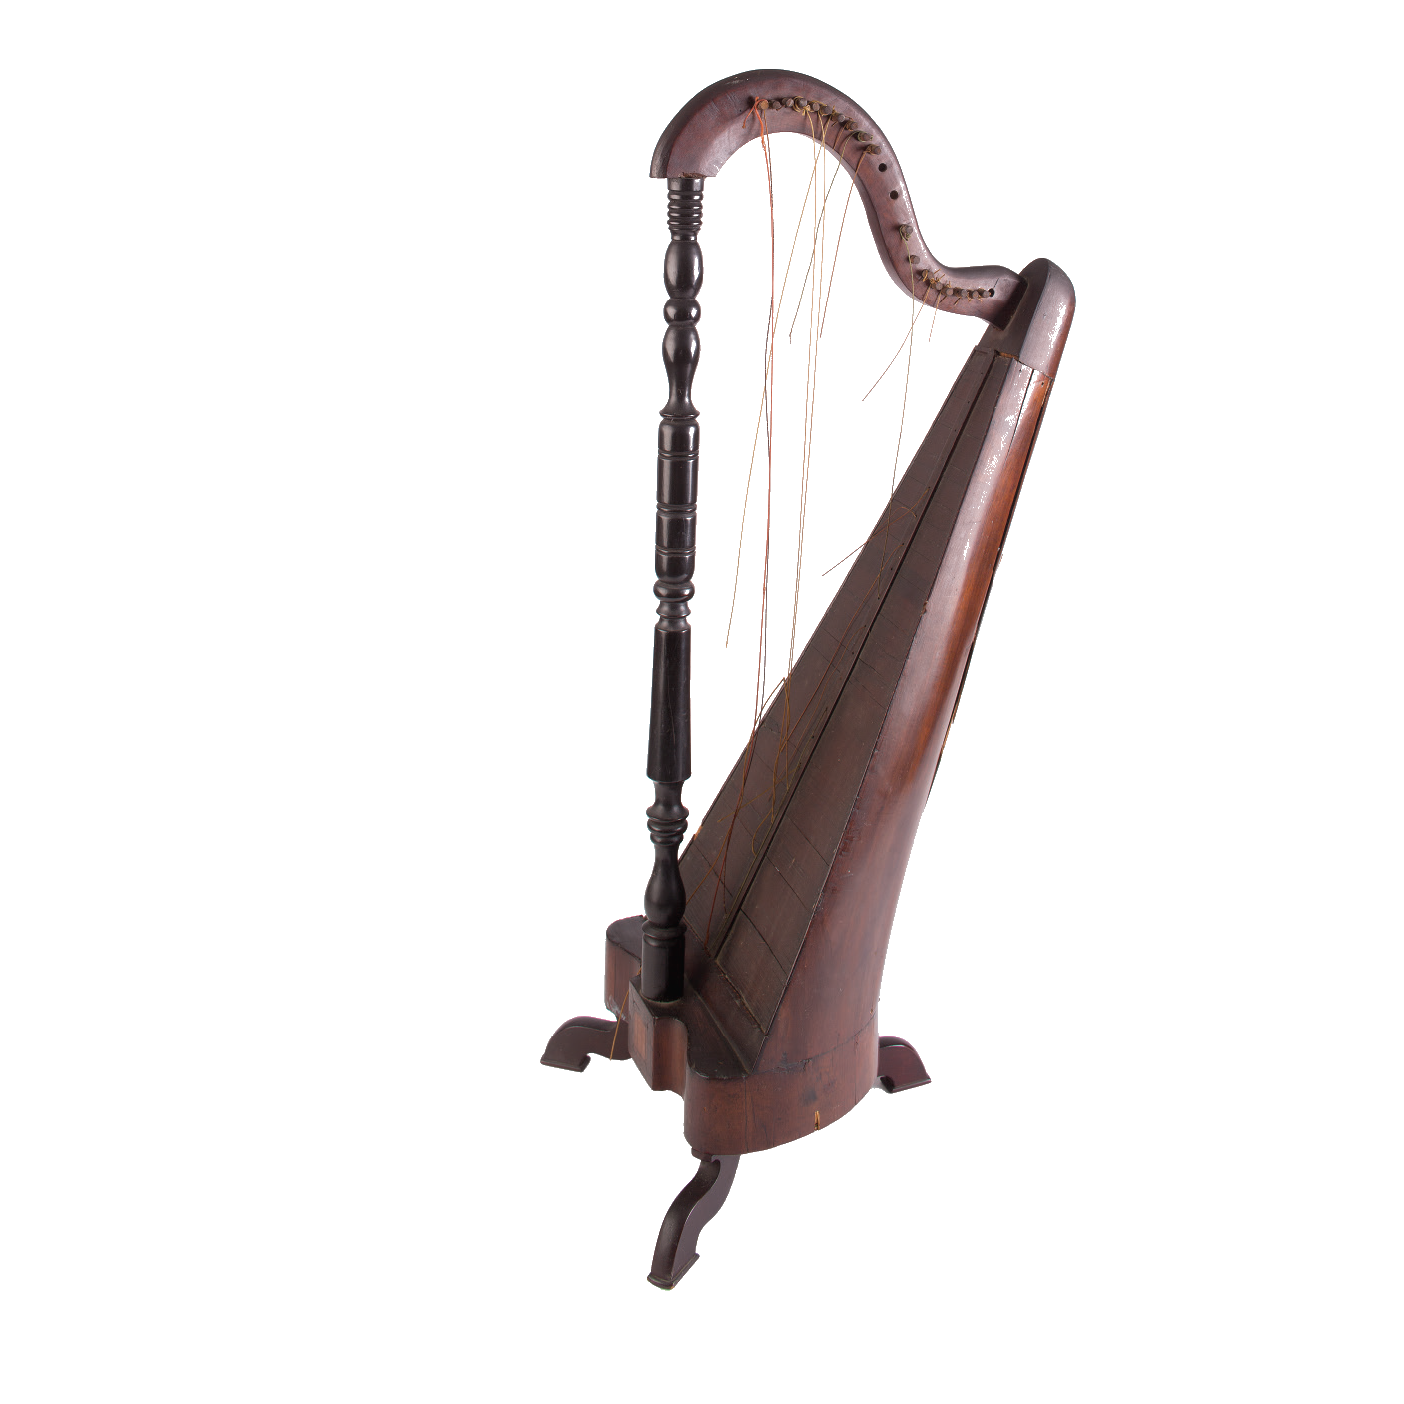 Lloyd Alexander’s Welsh harp with broken strings